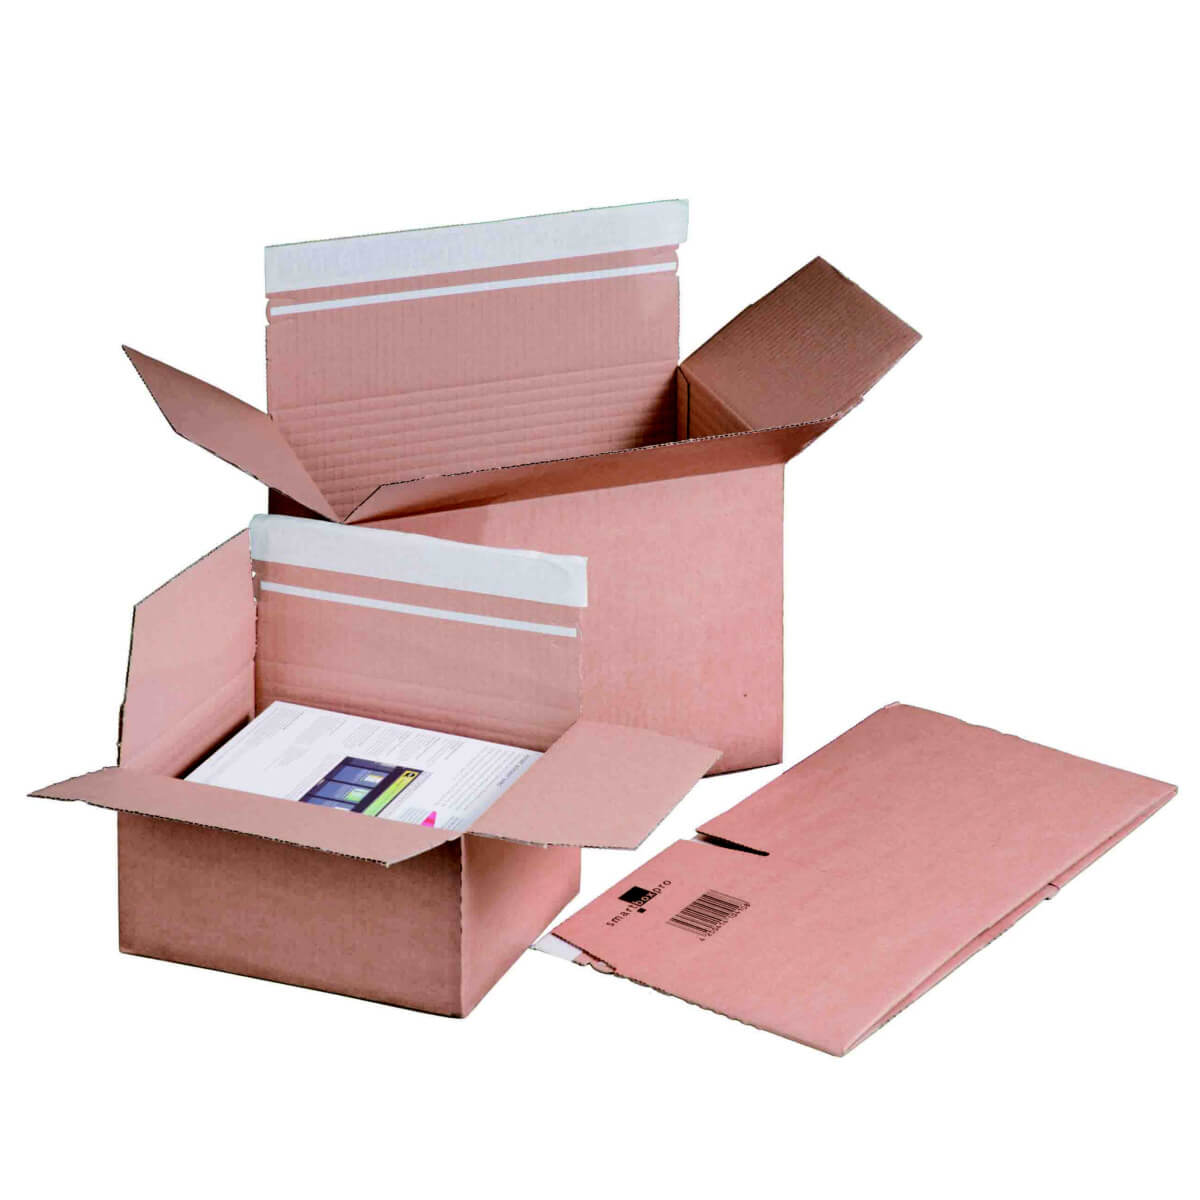 Hinged cardboard box 300x210x85 mm